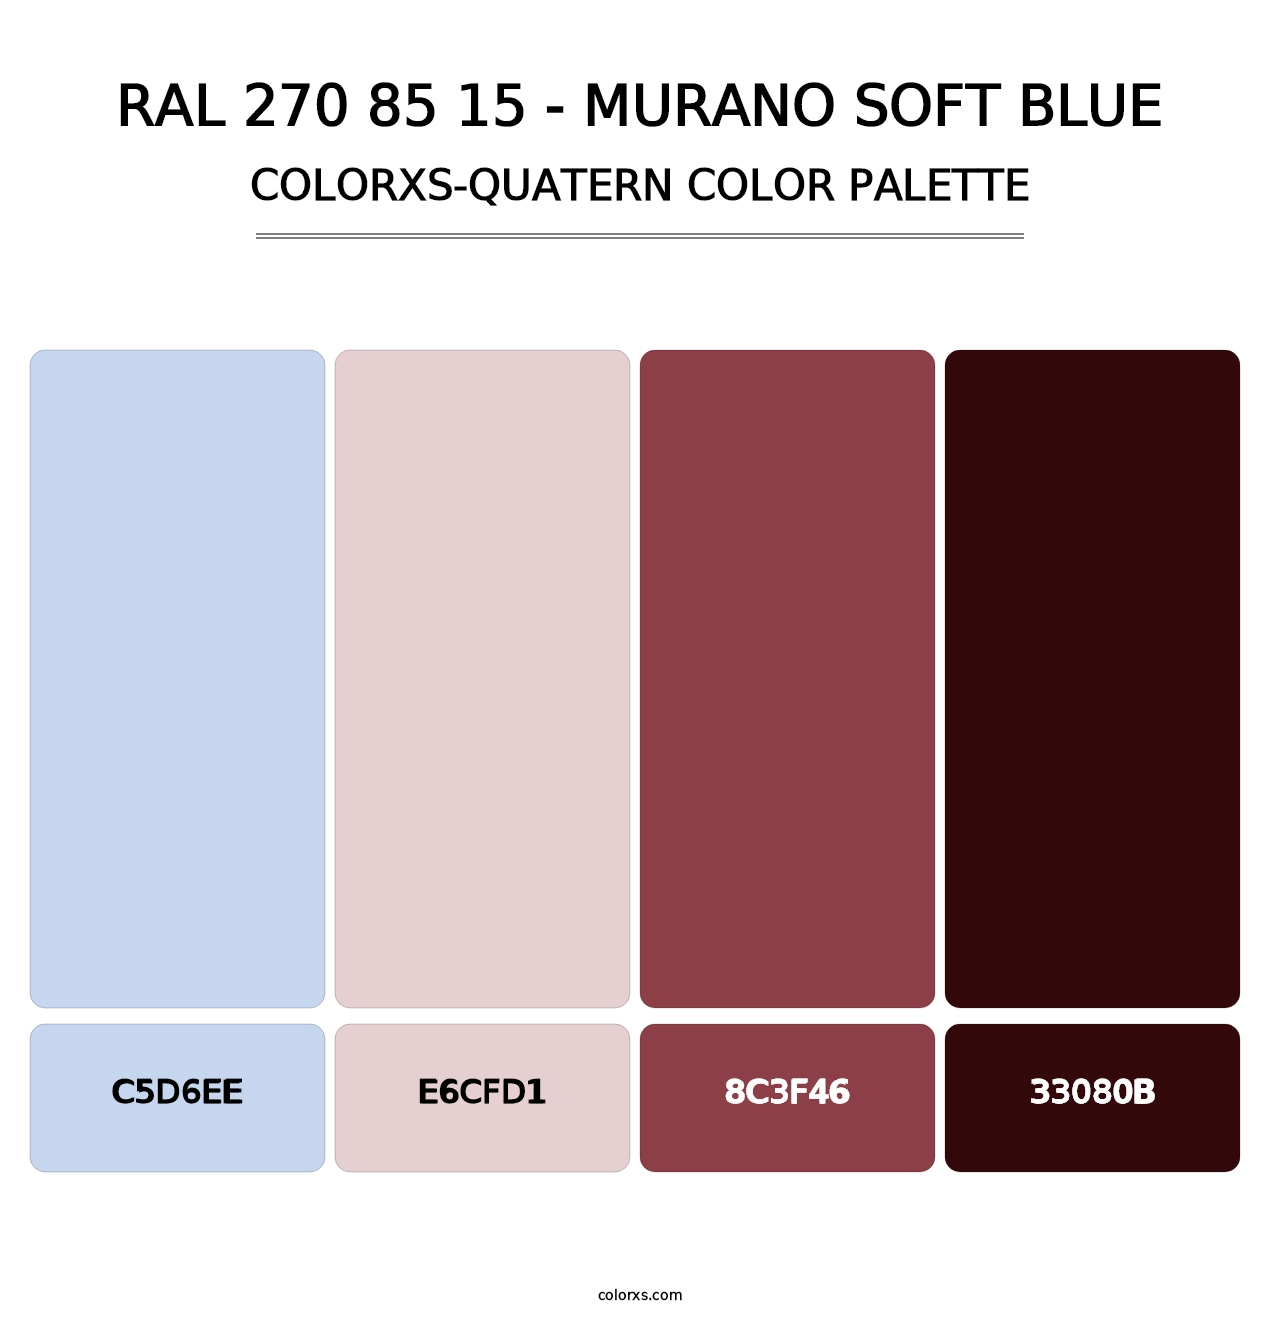 RAL 270 85 15 - Murano Soft Blue - Colorxs Quatern Palette